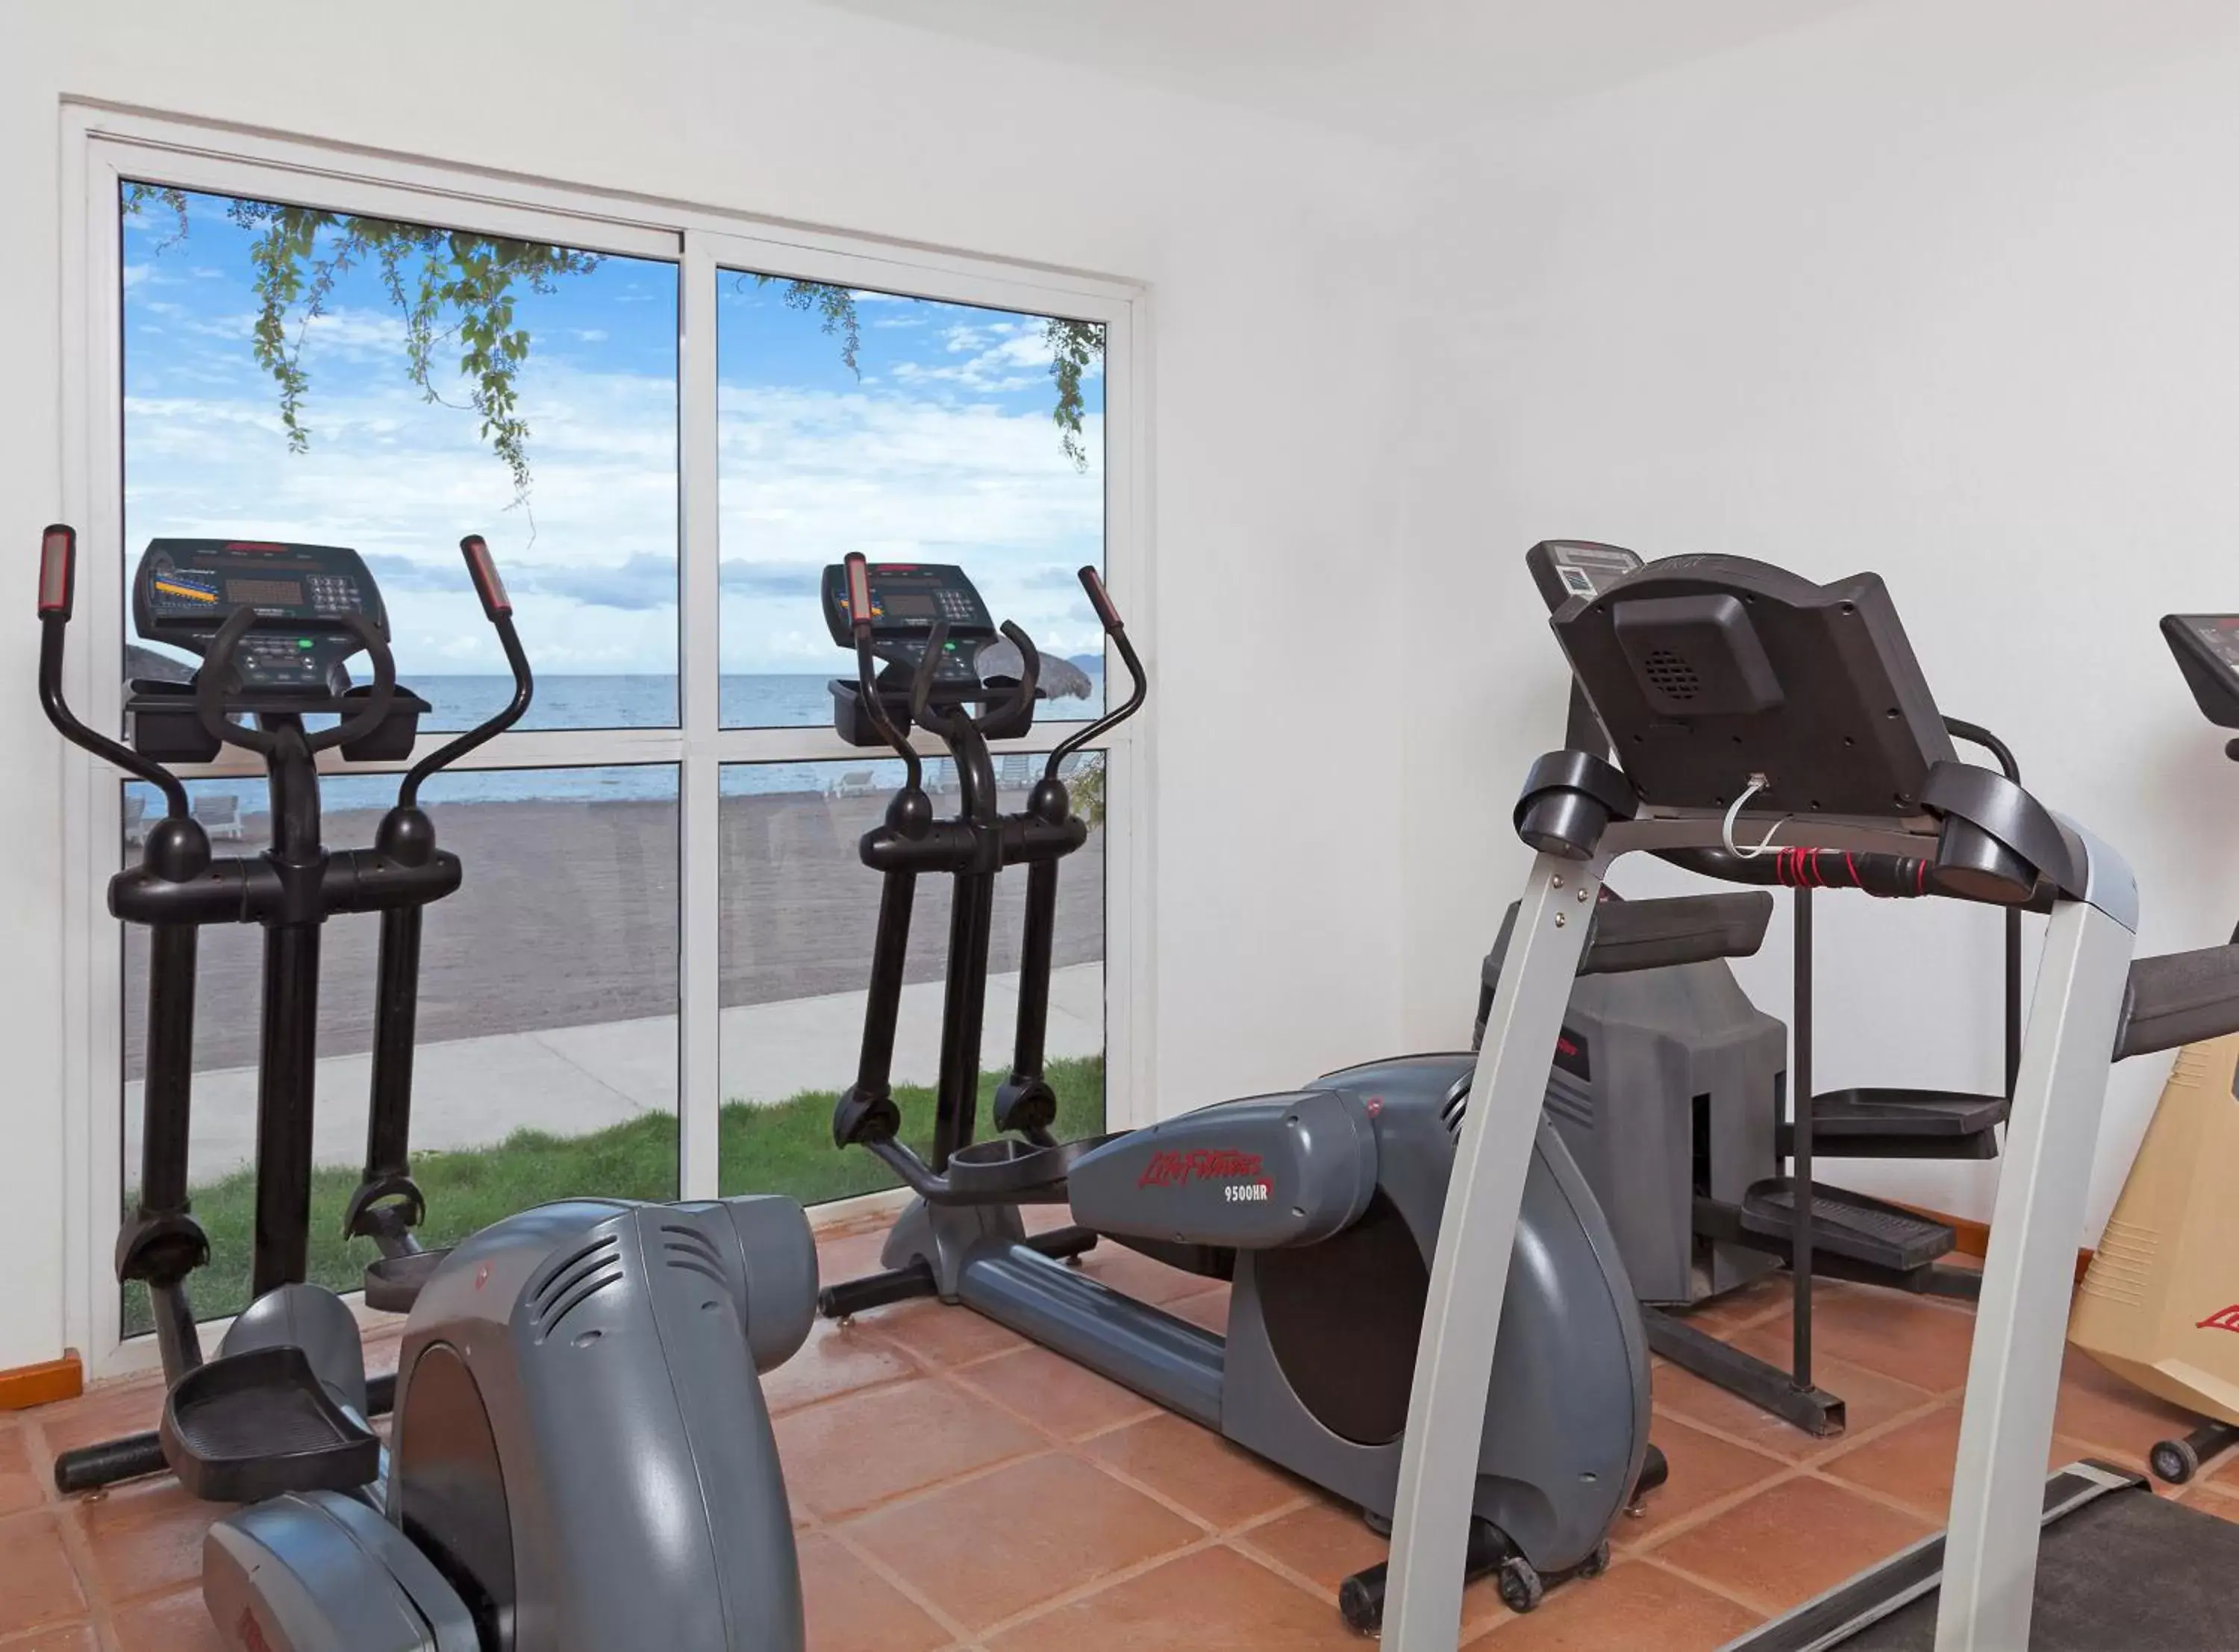 Fitness centre/facilities, Fitness Center/Facilities in Loreto Bay Golf Resort & Spa at Baja